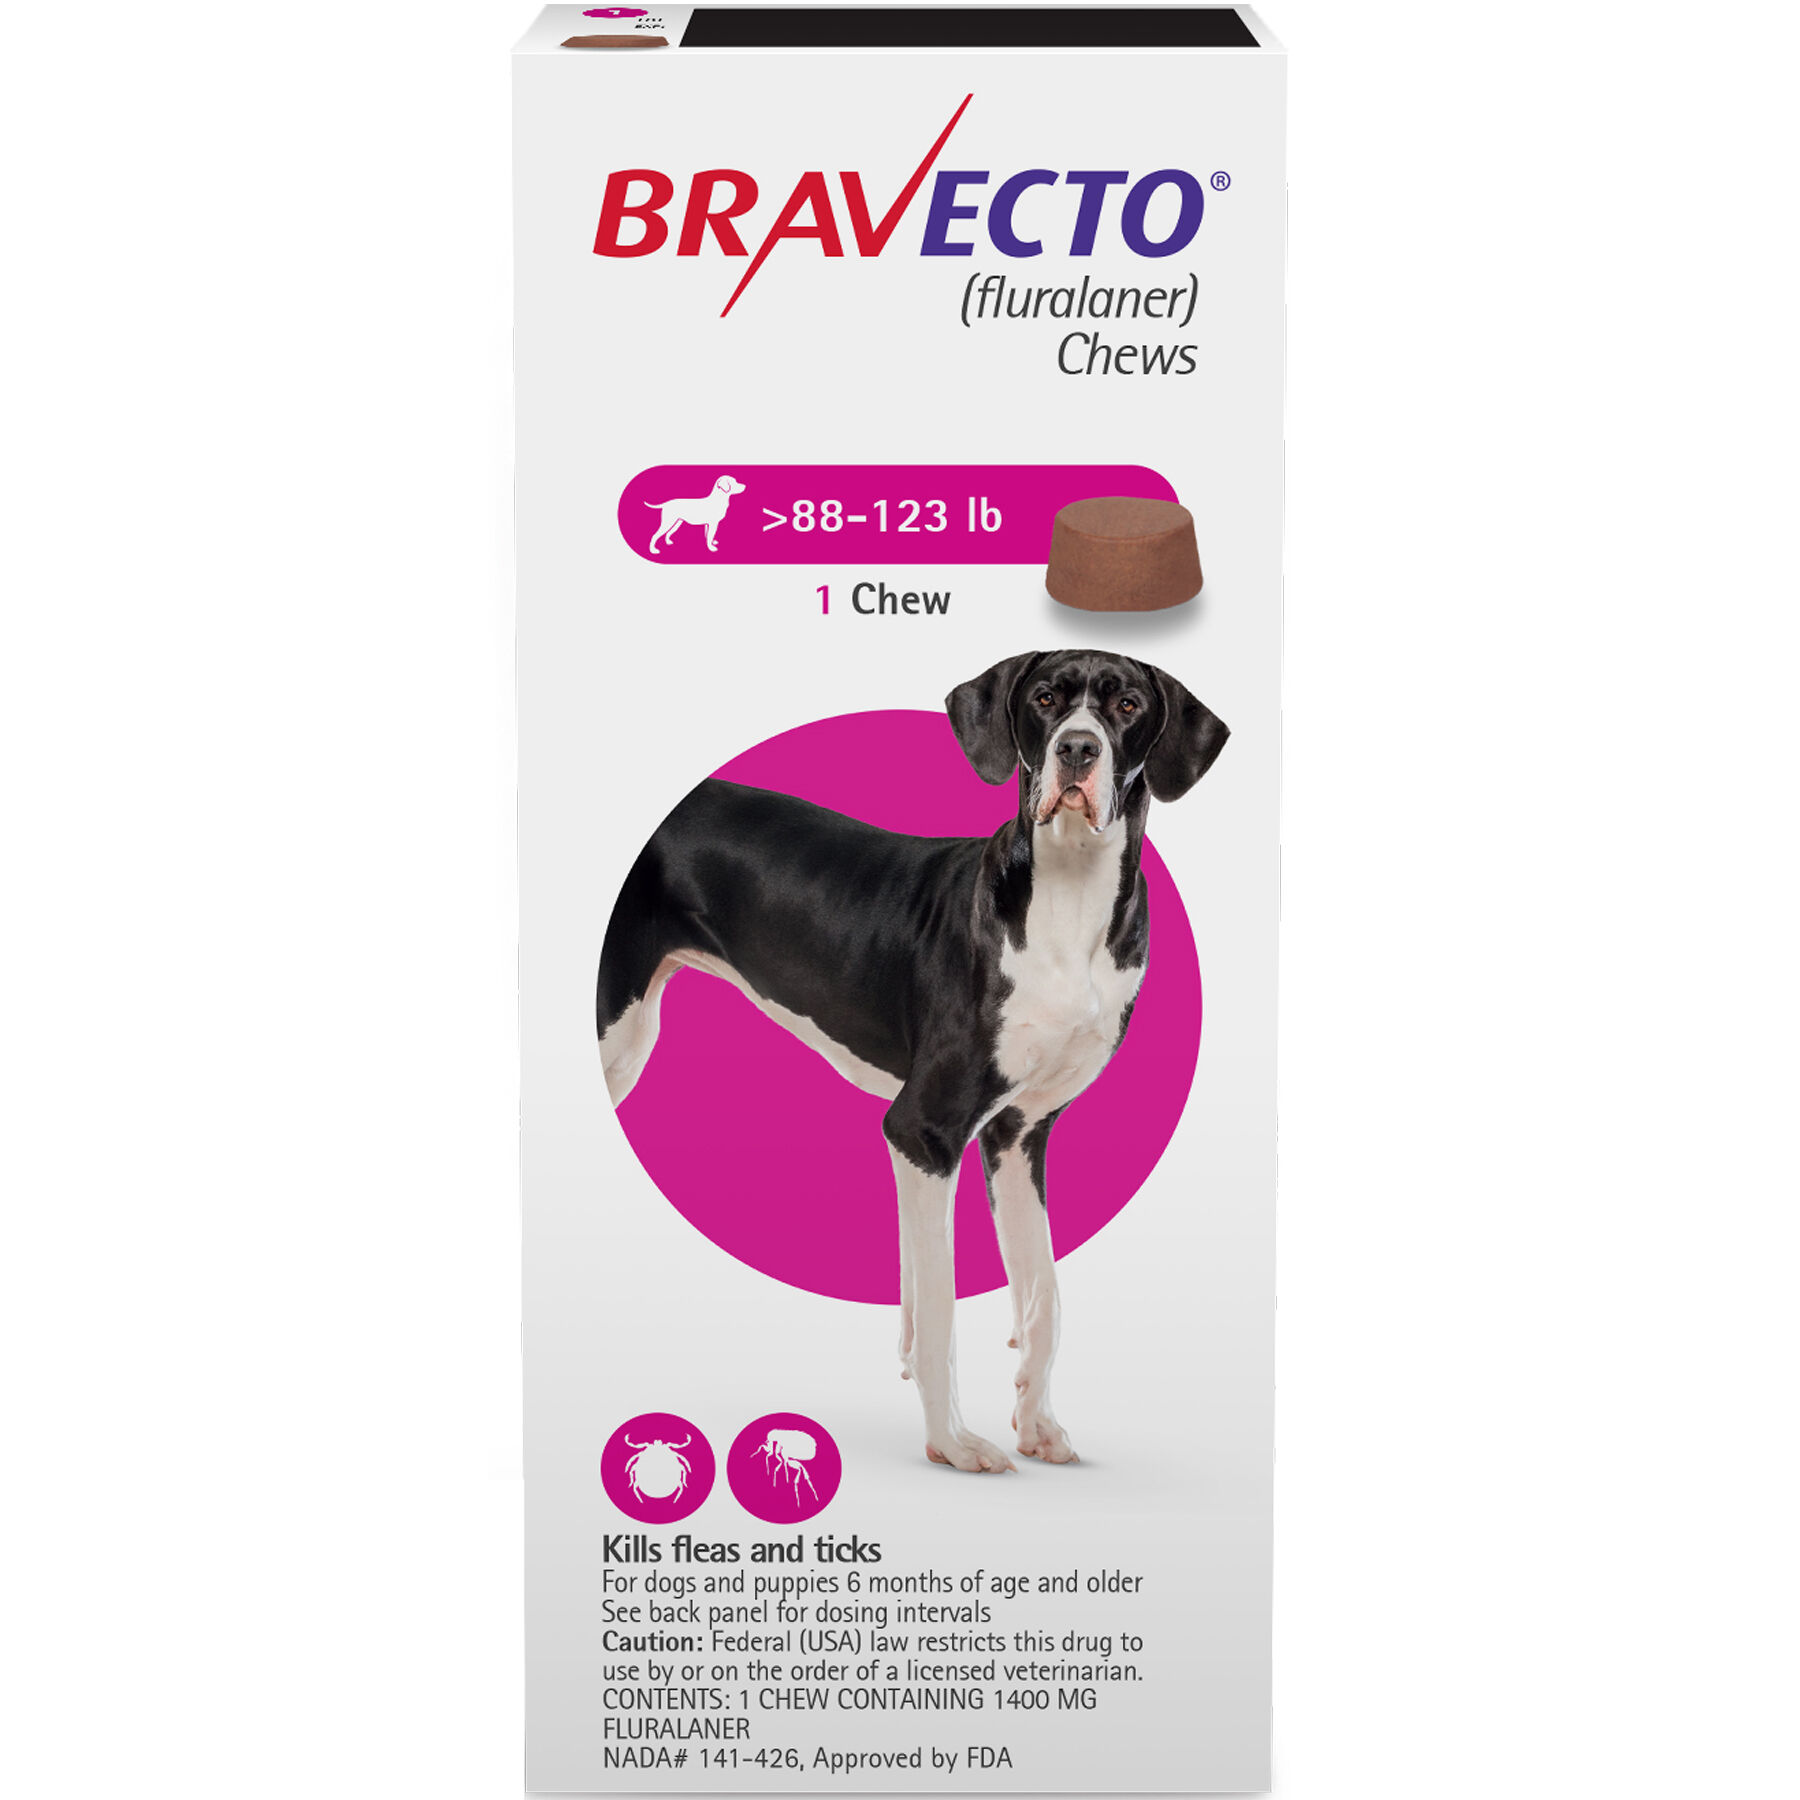 bravotec flea and tick